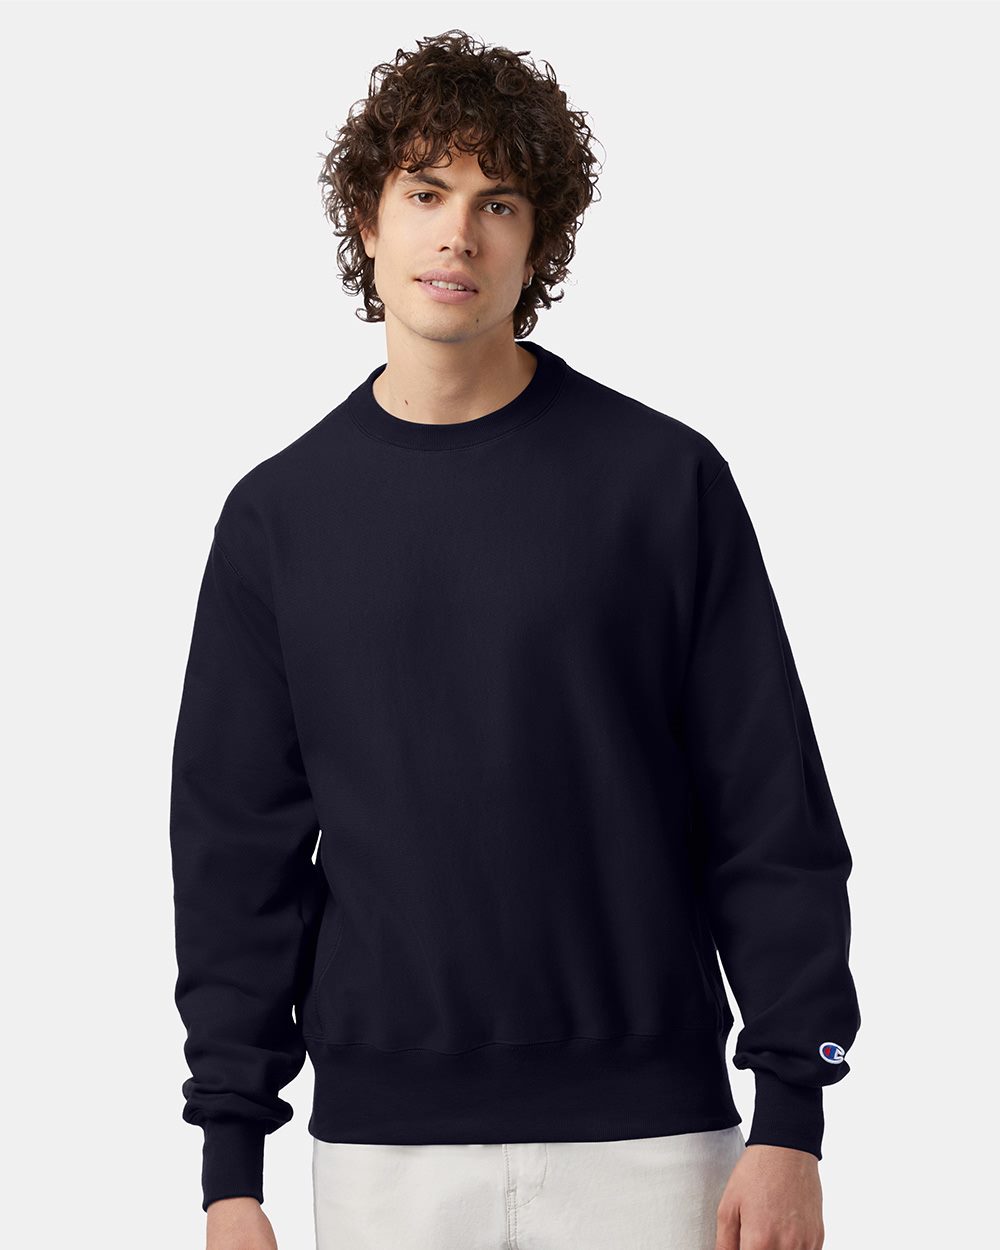 Reverse Weave® Crewneck Sweatshirt - Champion Clothing Shop